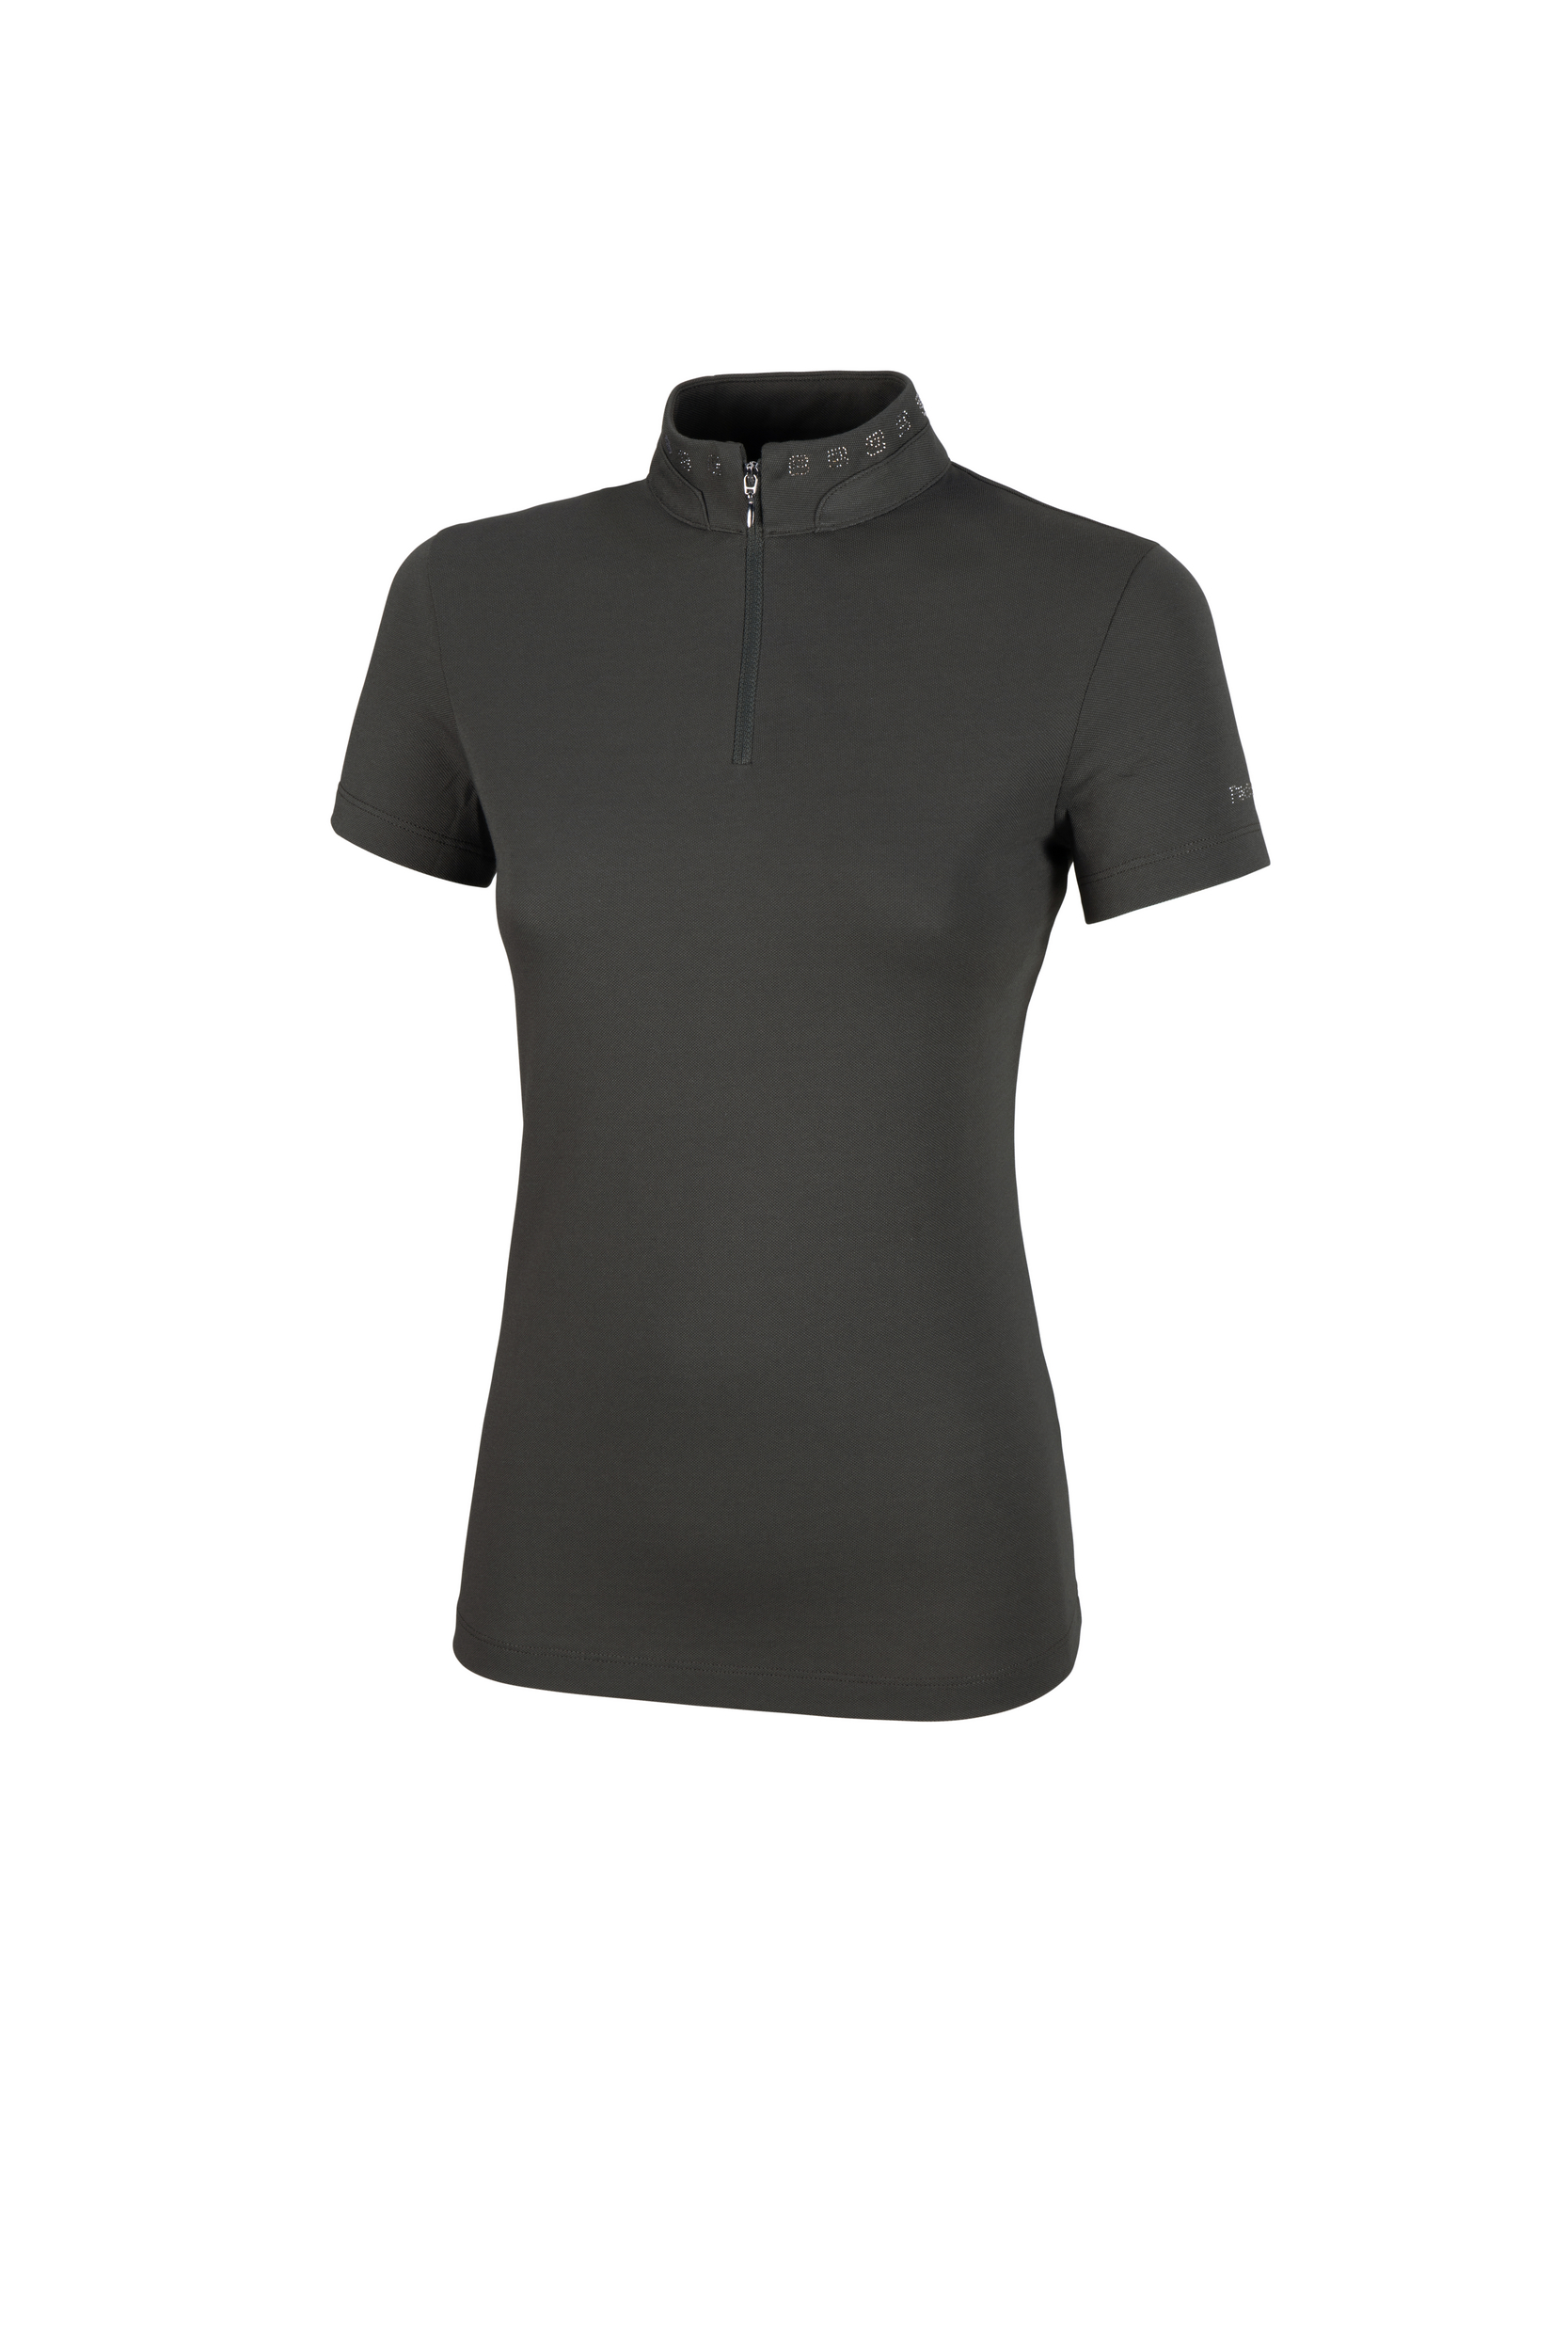 PIKEUR Damen Zip Trainings Shirt Icon 5230 Sports FS24 - dark olive - 40 - 2